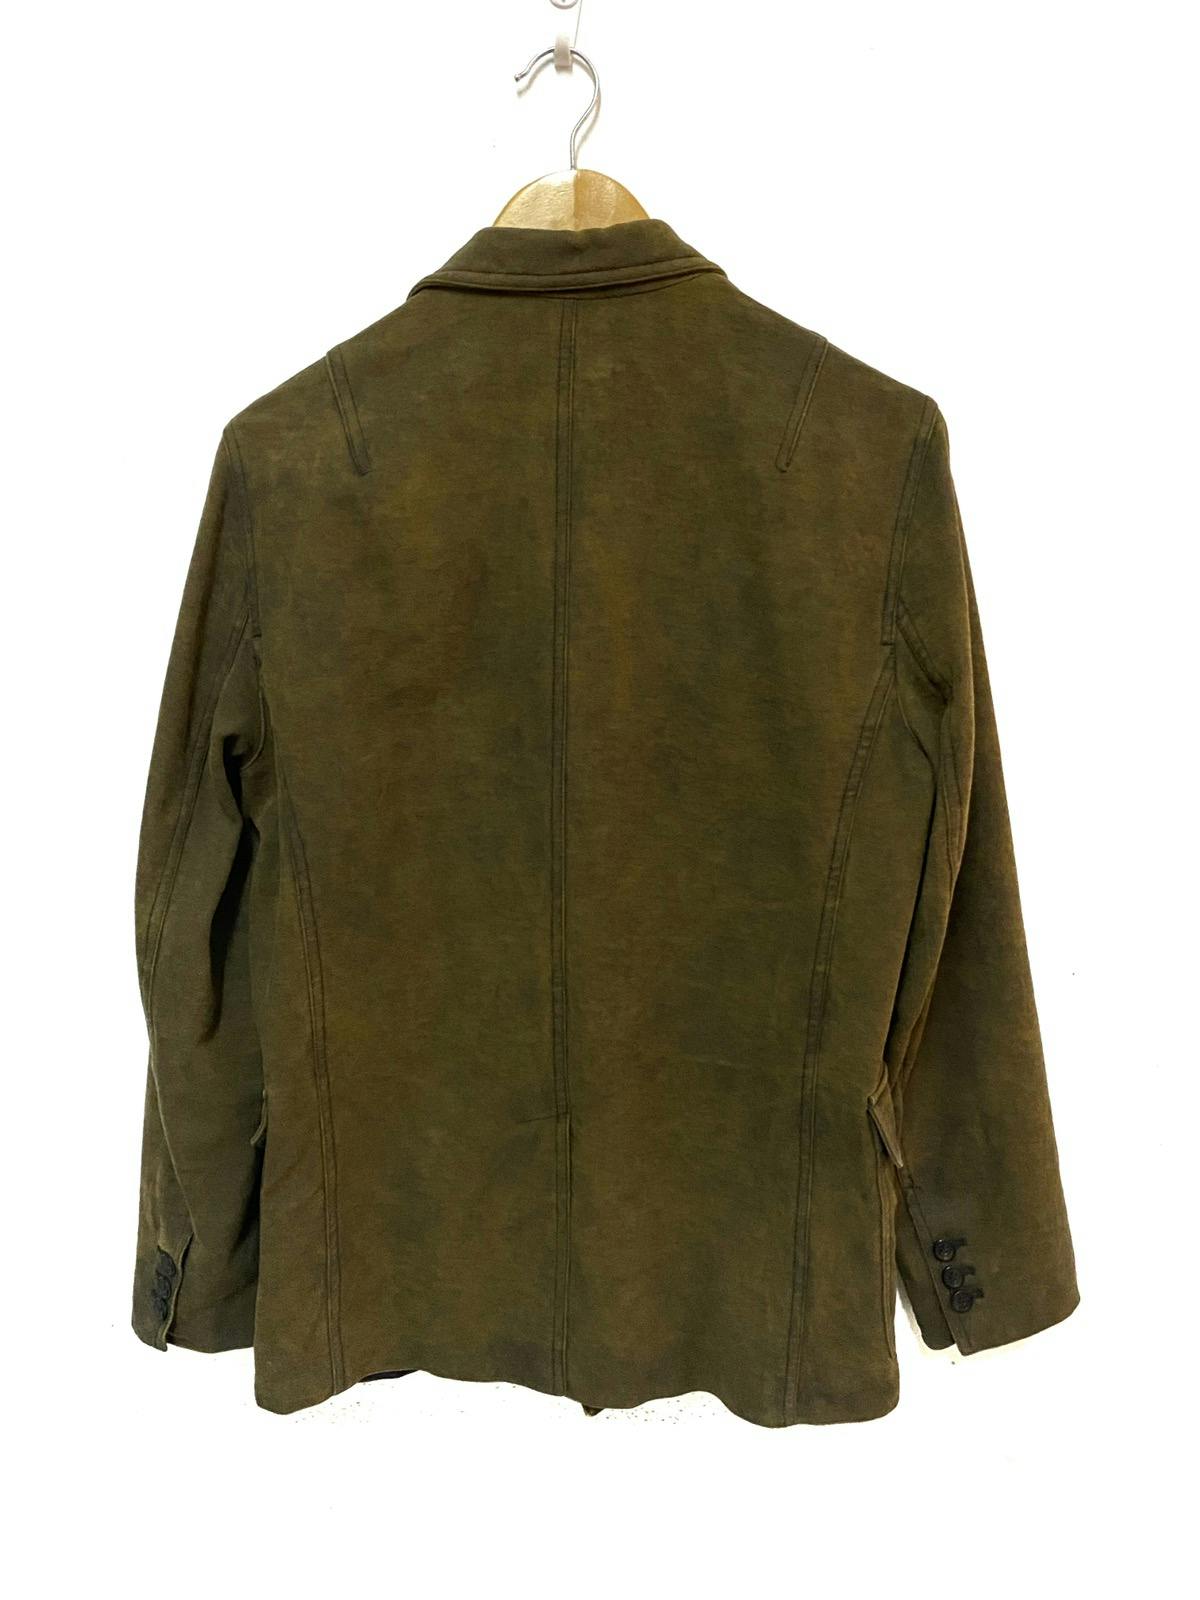 Neil Barrett Jacket Coat Blazer Made in Italy - 5